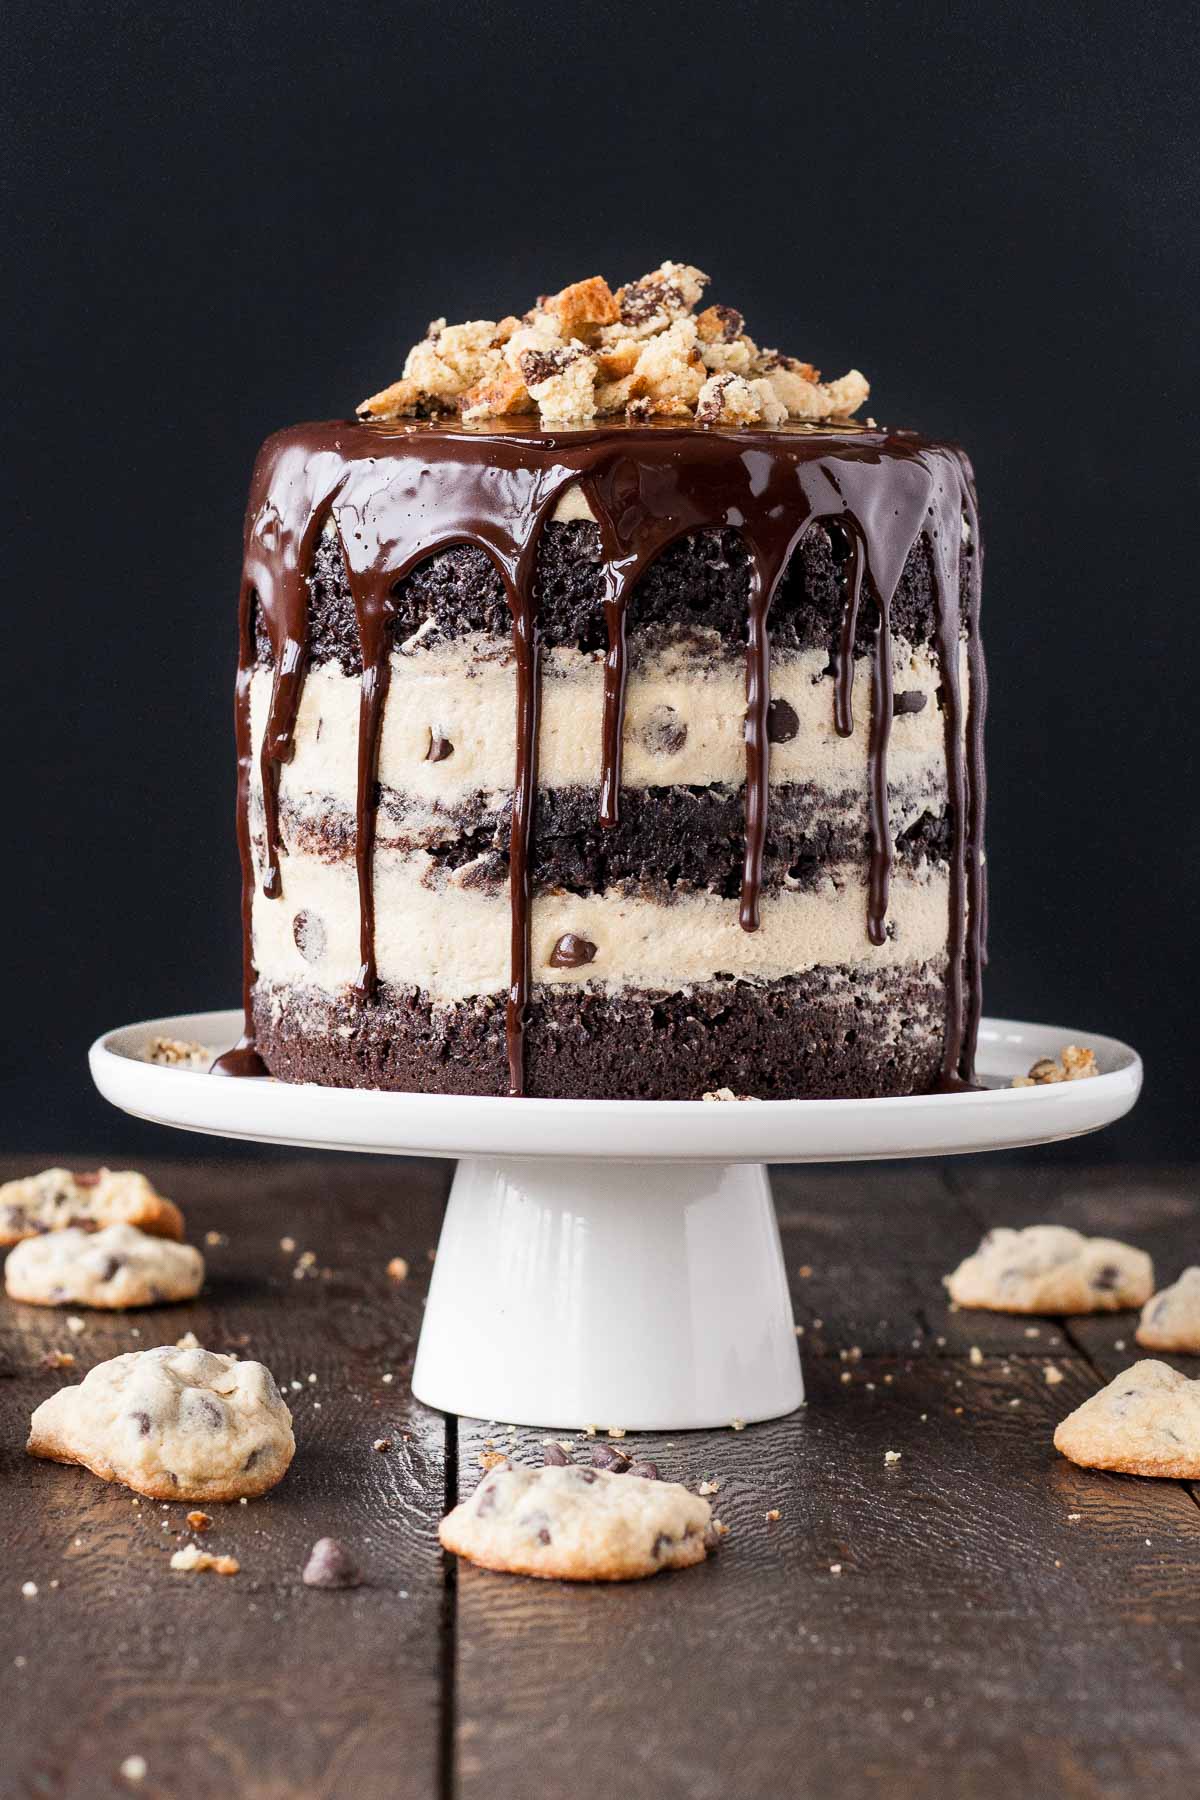 Cookie dough chocolate cake 2